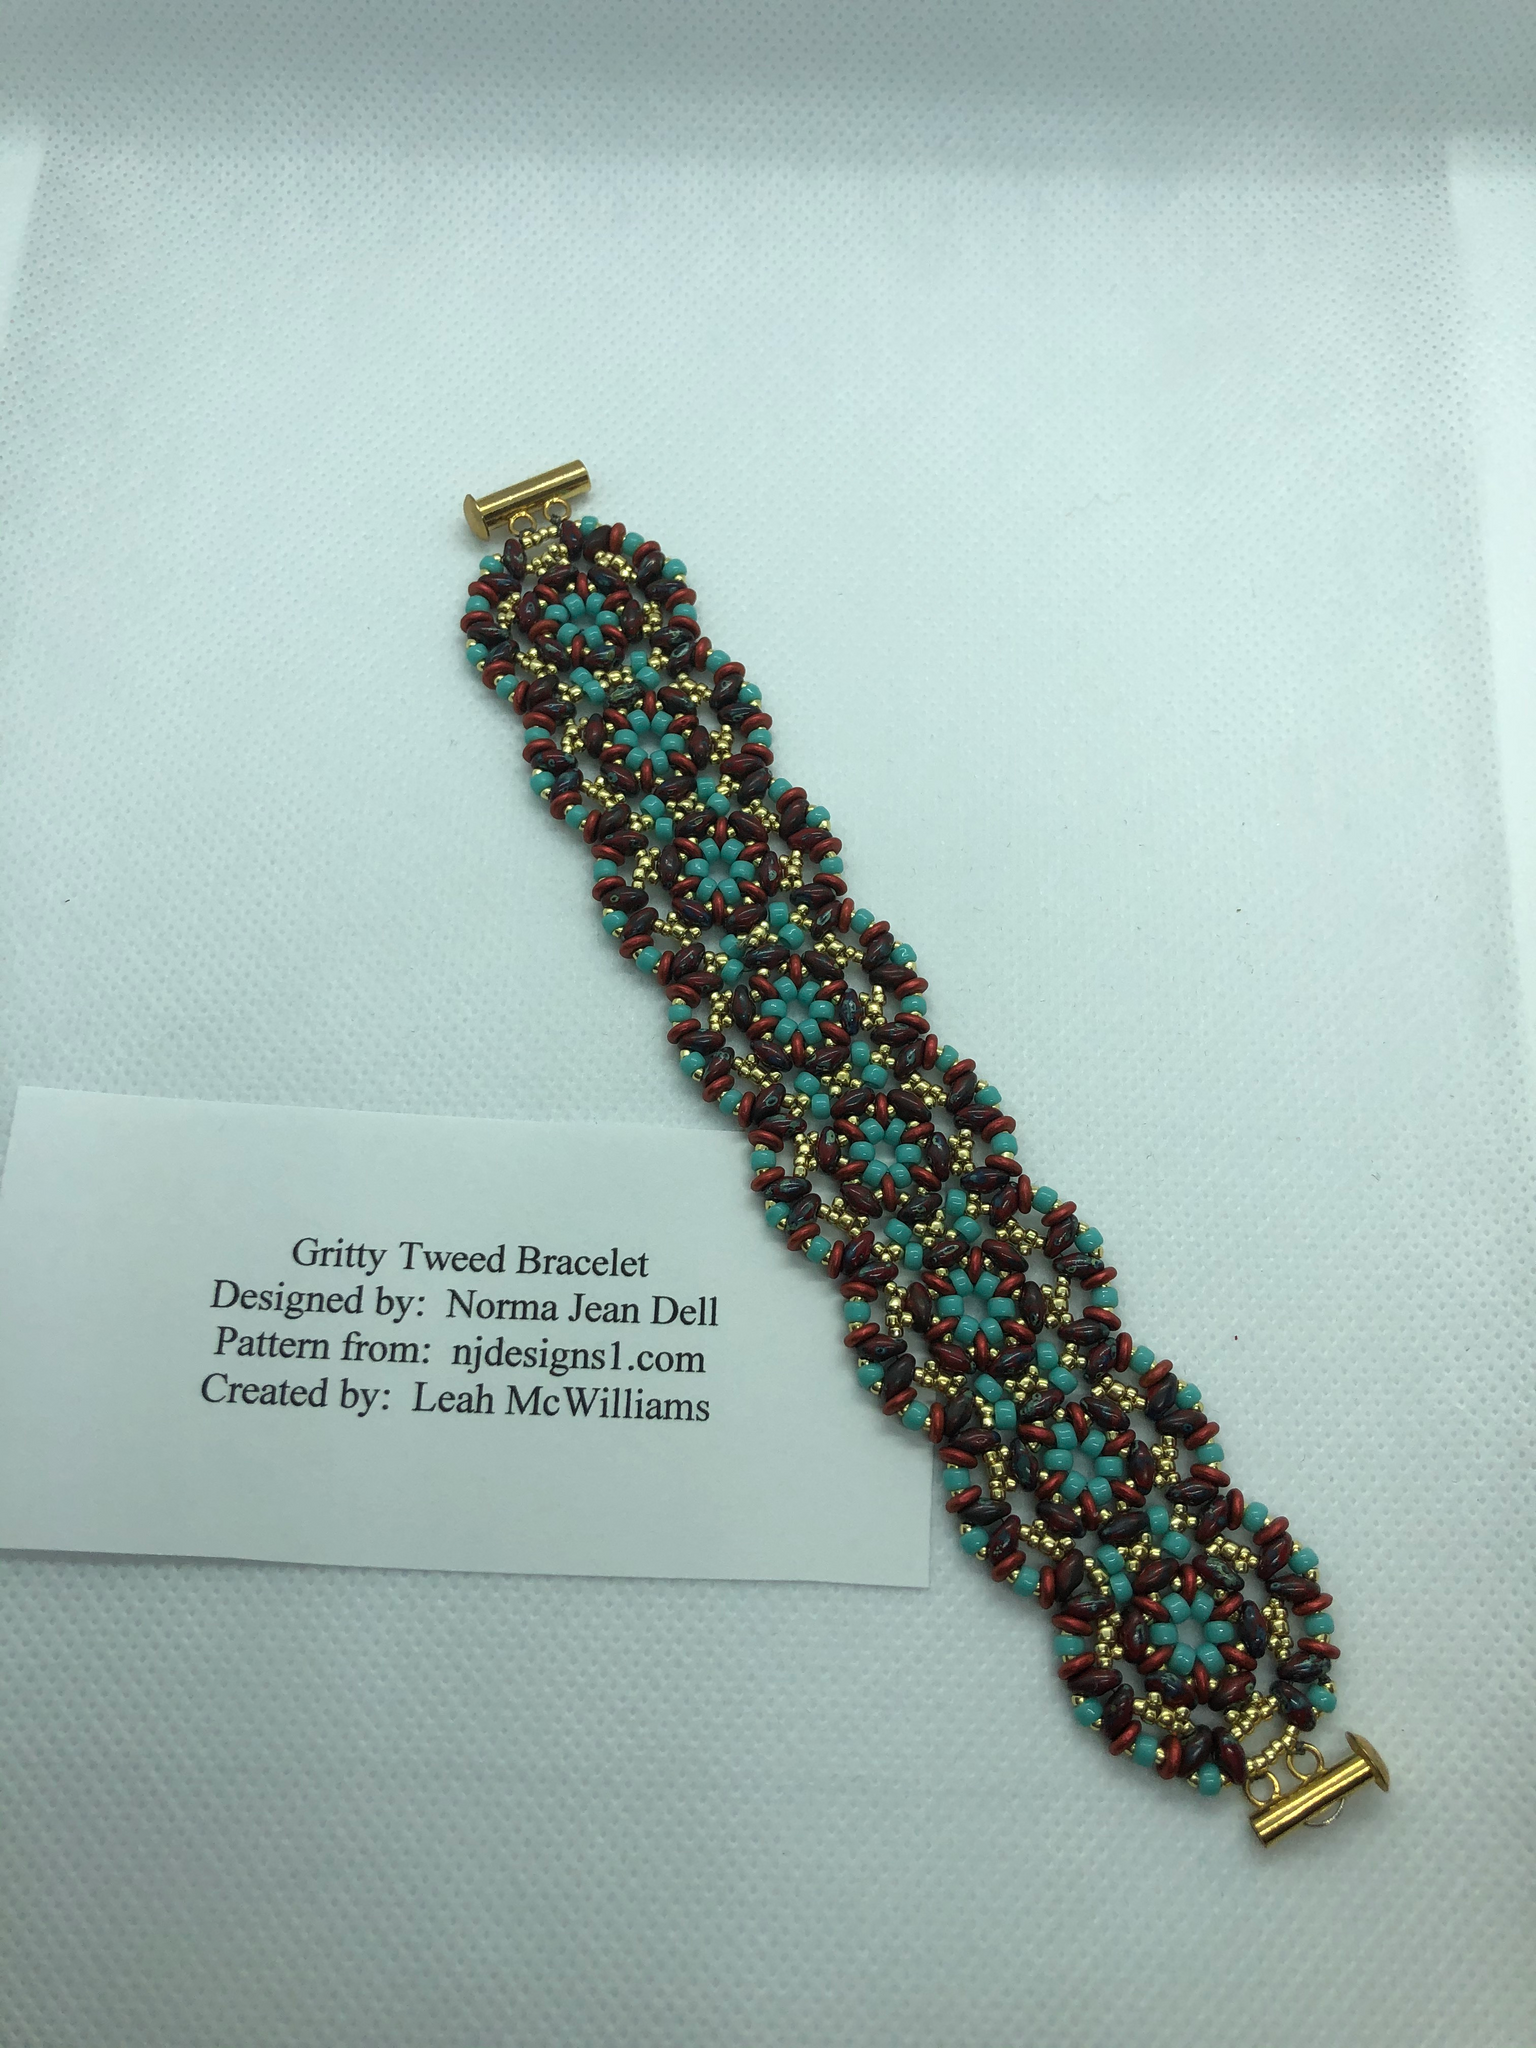 Gritty Tweed Bracelet